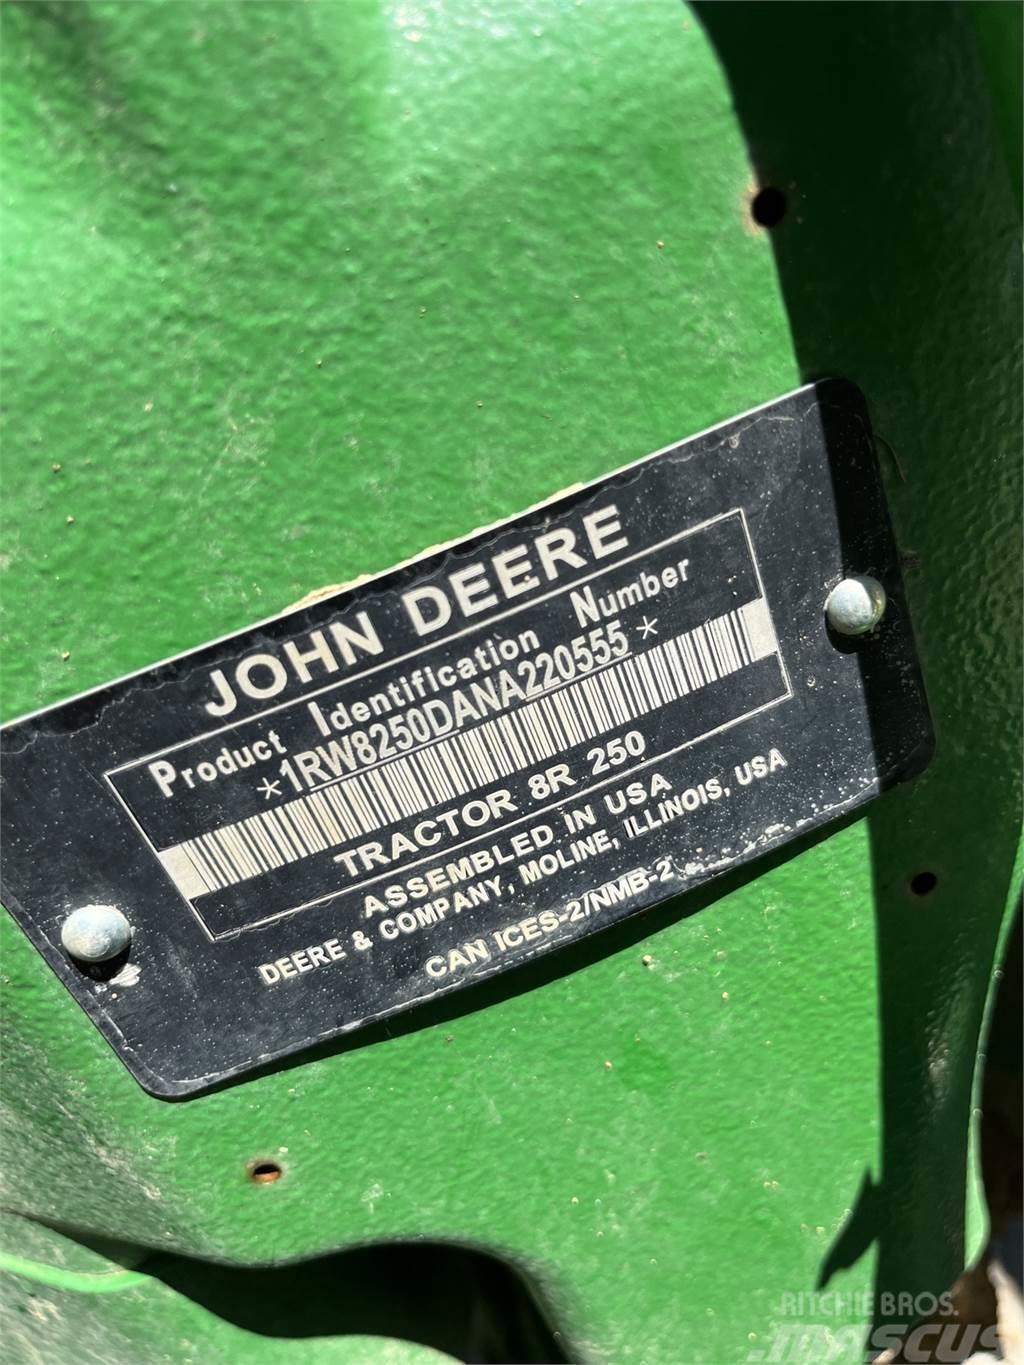 John Deere 8R 250 Traktori